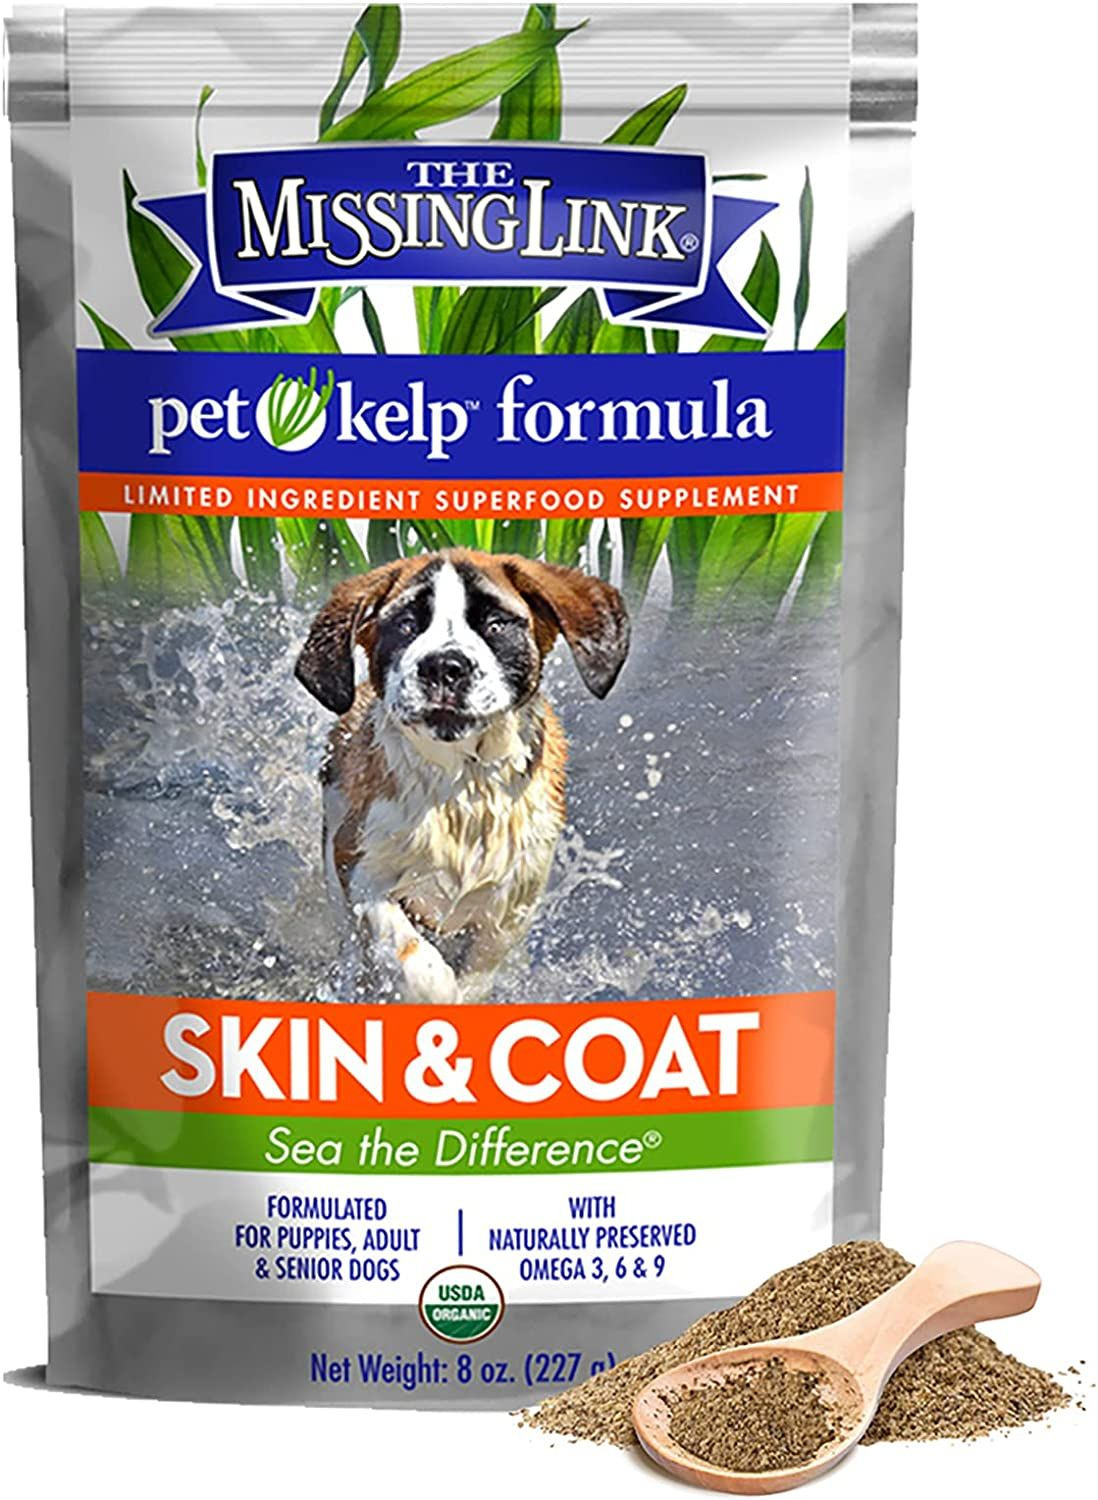 The Missing Link Pet Kelp Skin & Coat Powder Formula, 8 oz, & 